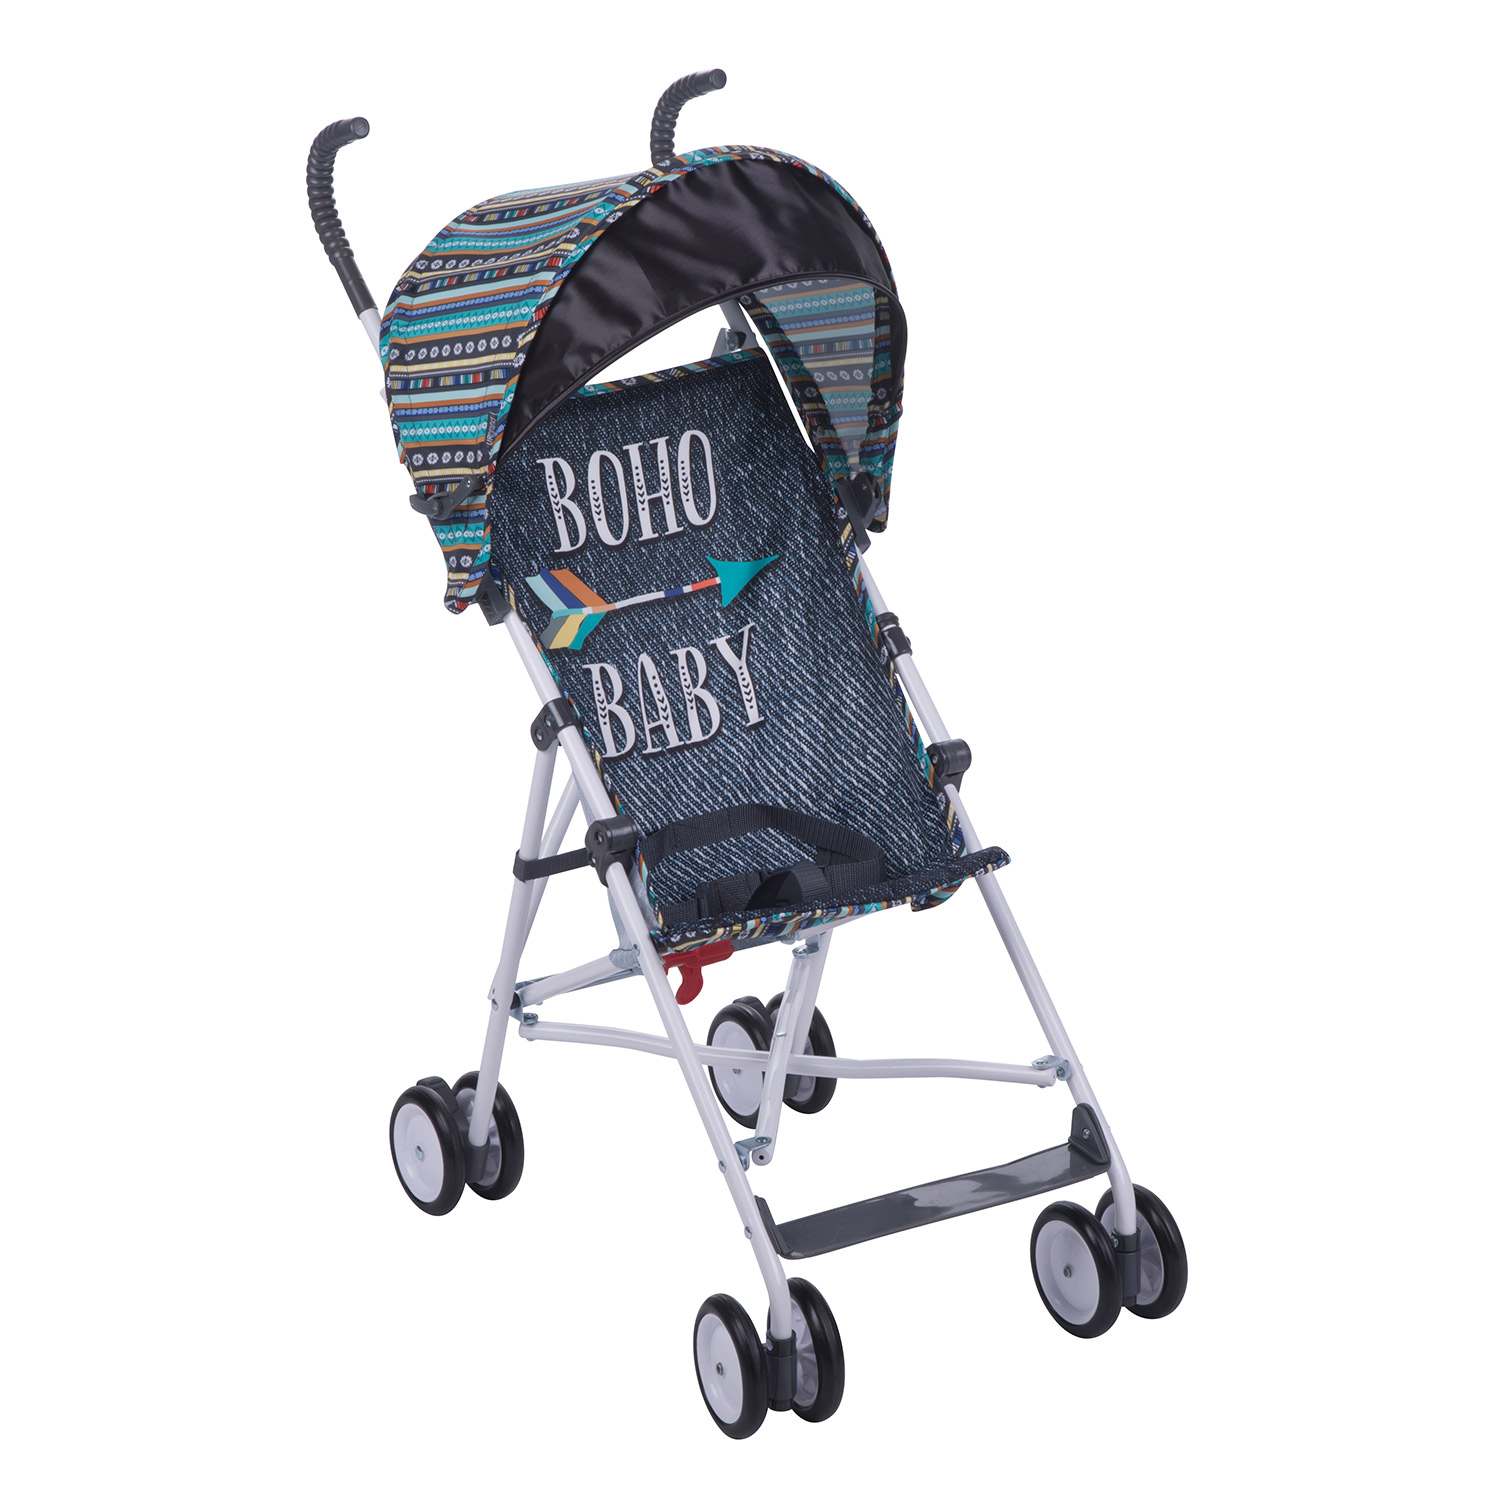 a baby stroller